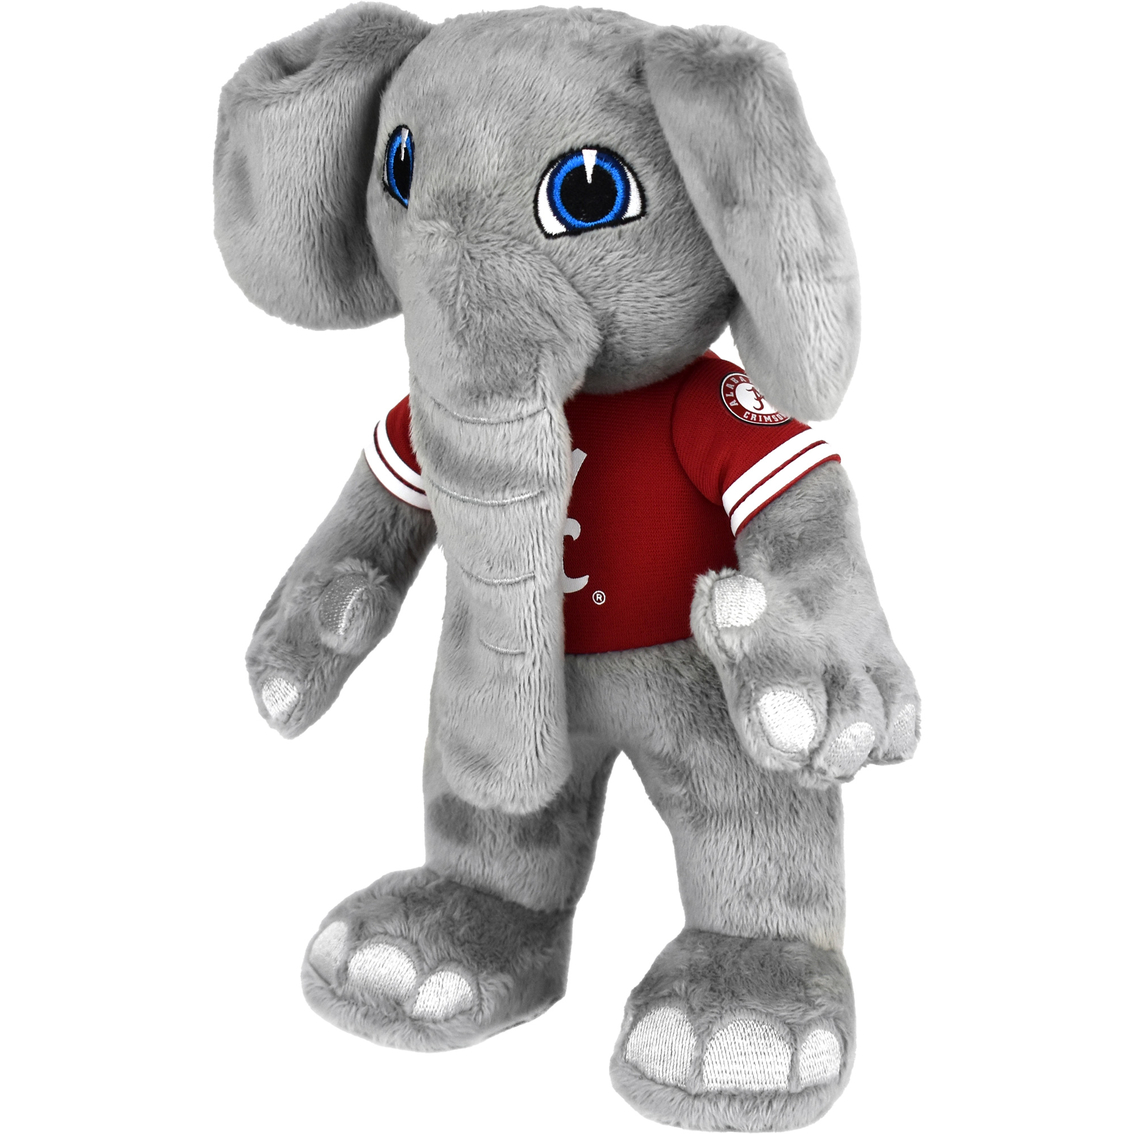 Bleacher Creatures Al The Elephant Mascot 10 in. Plush Figure - Image 3 of 3